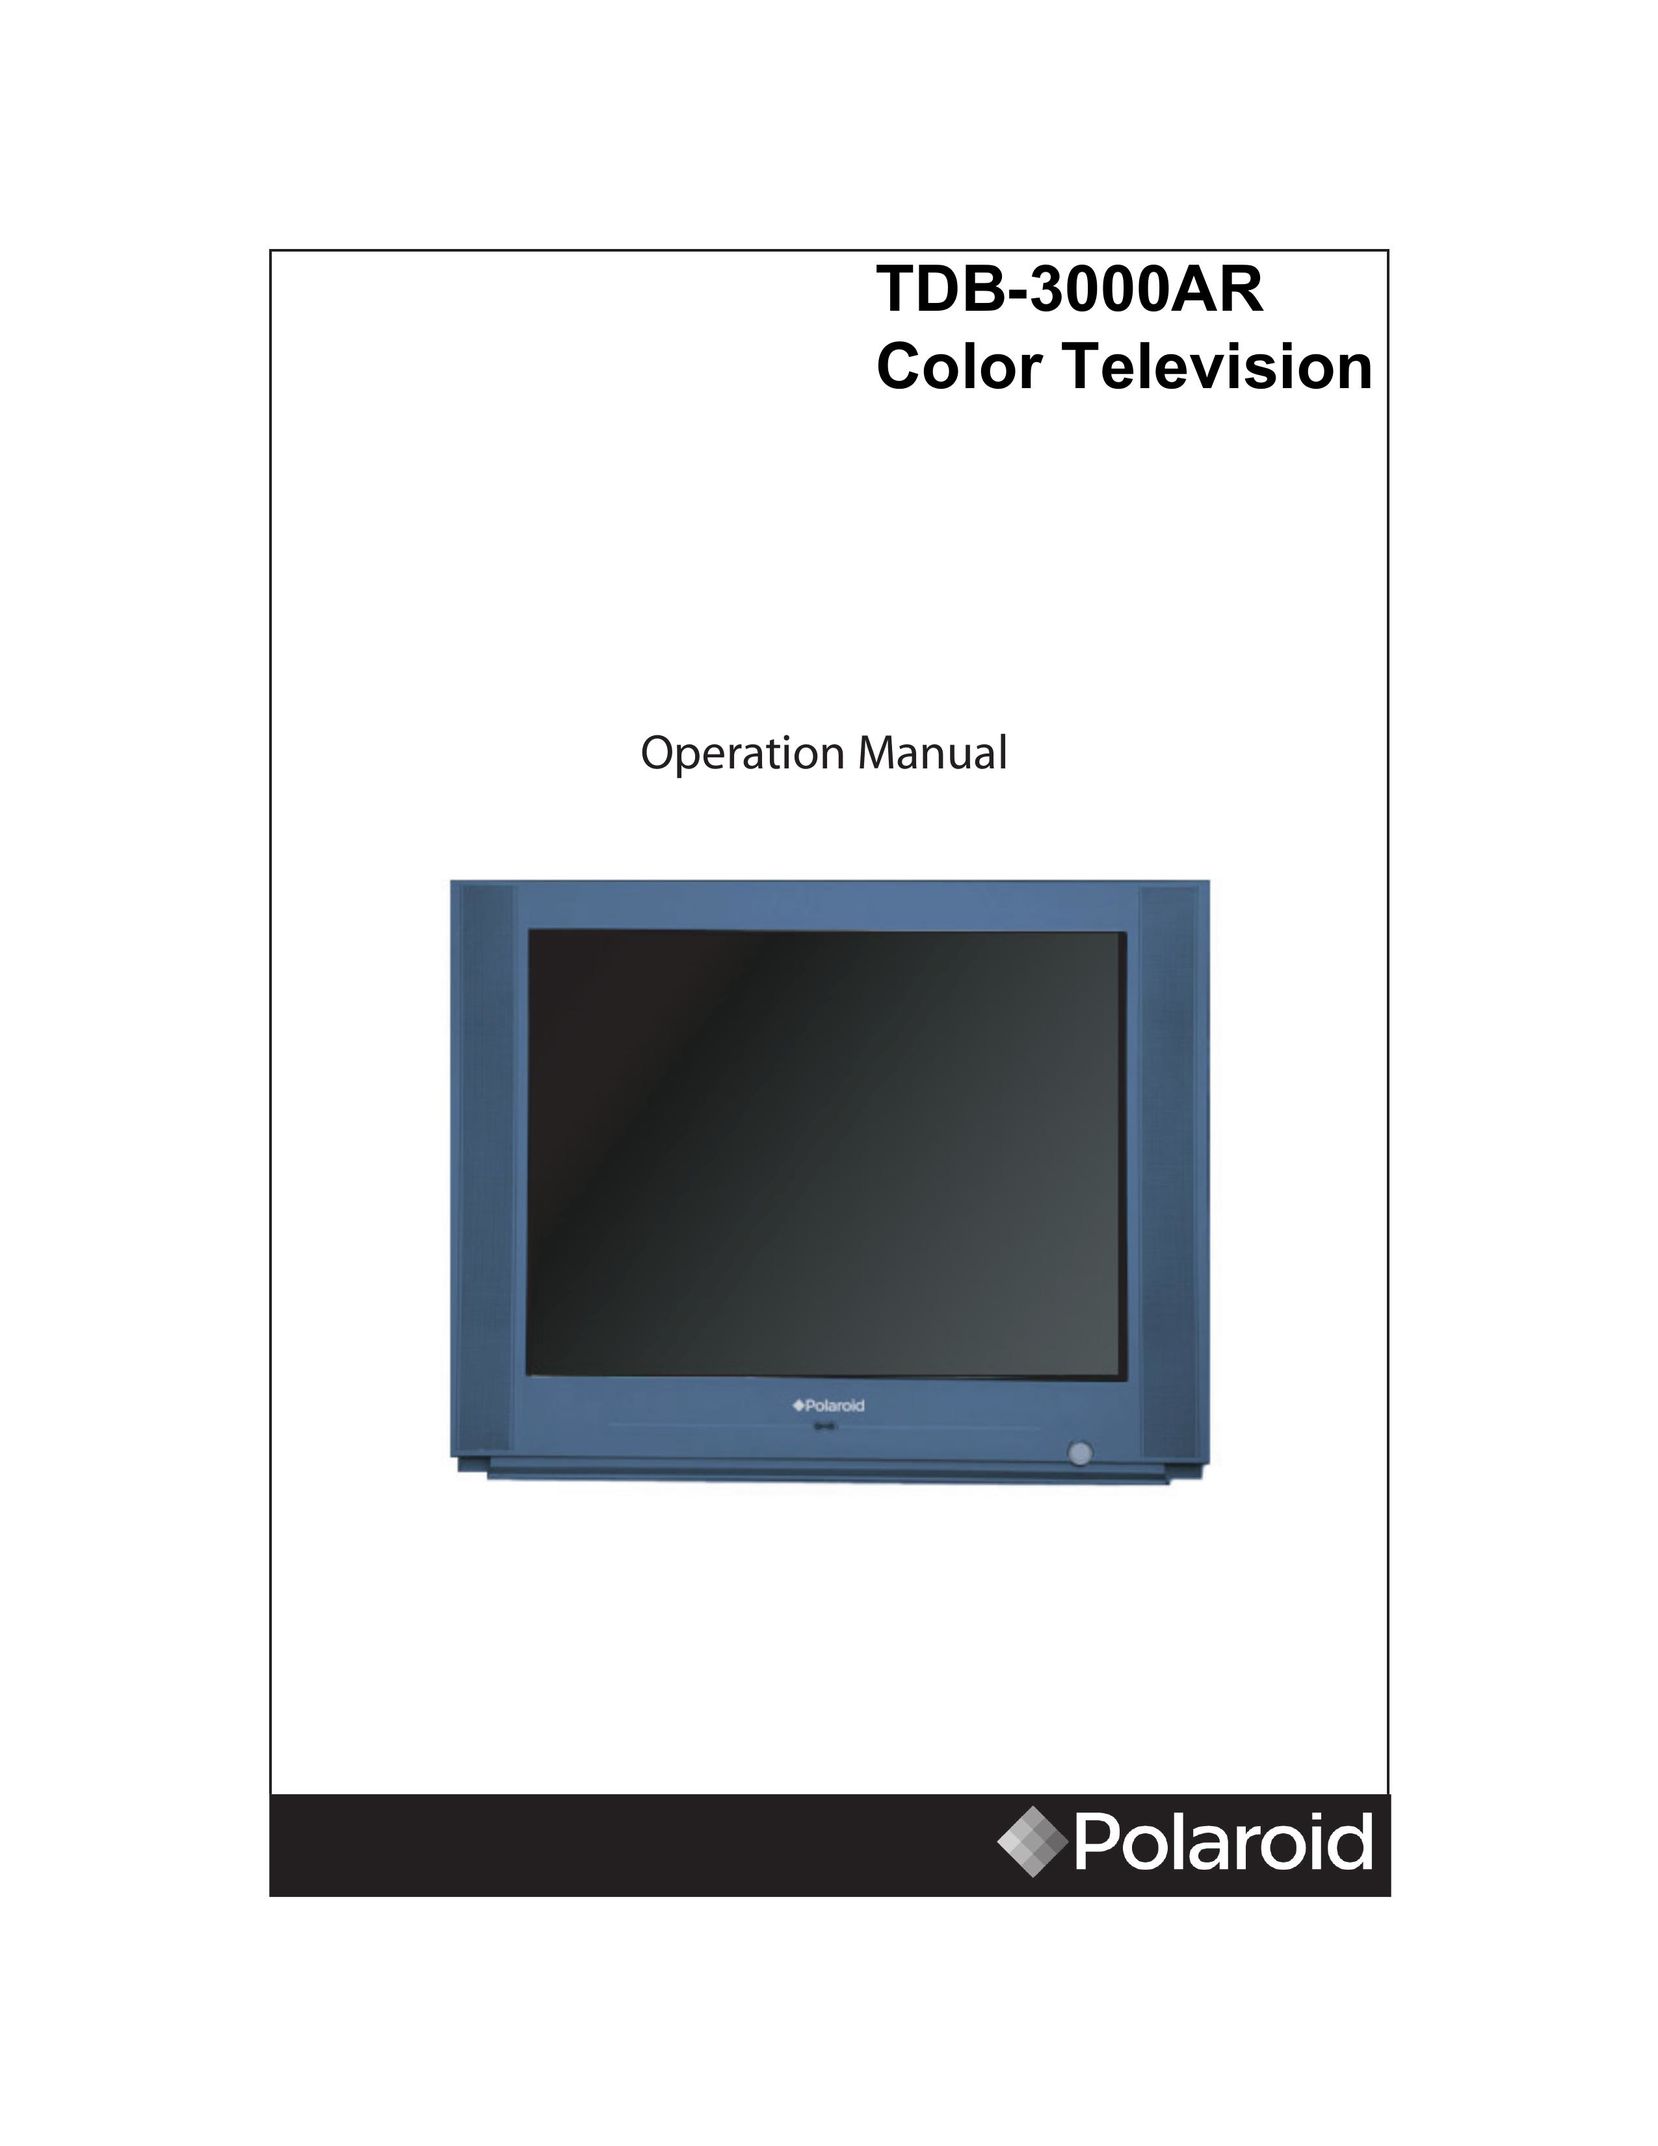 Polaroid TDB-3000AR CRT Television User Manual